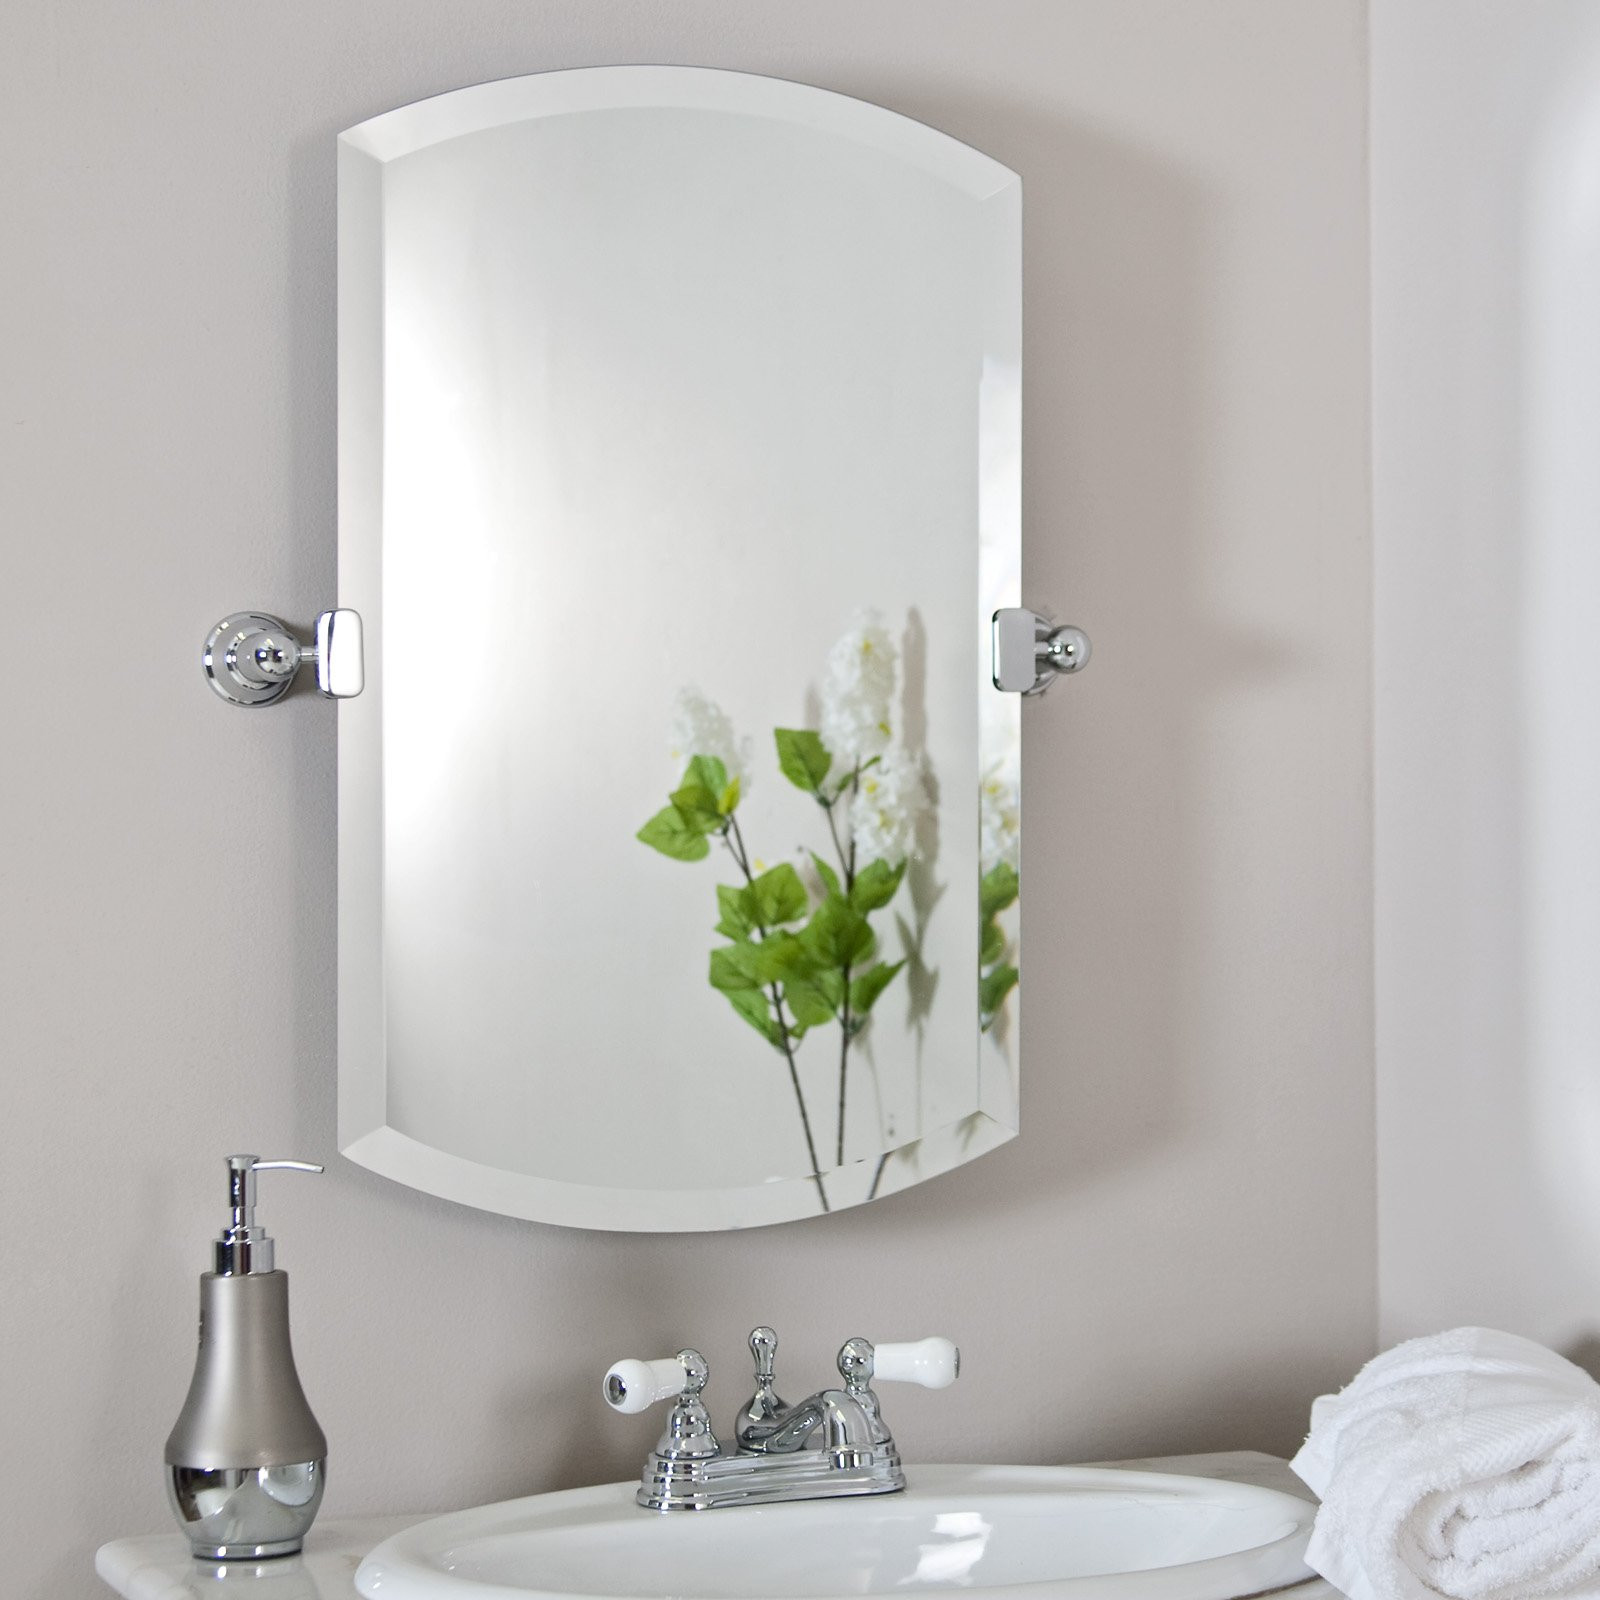 Cool Bathroom Mirrors
 Bathroom Mirror Designs and Decorative Ideas